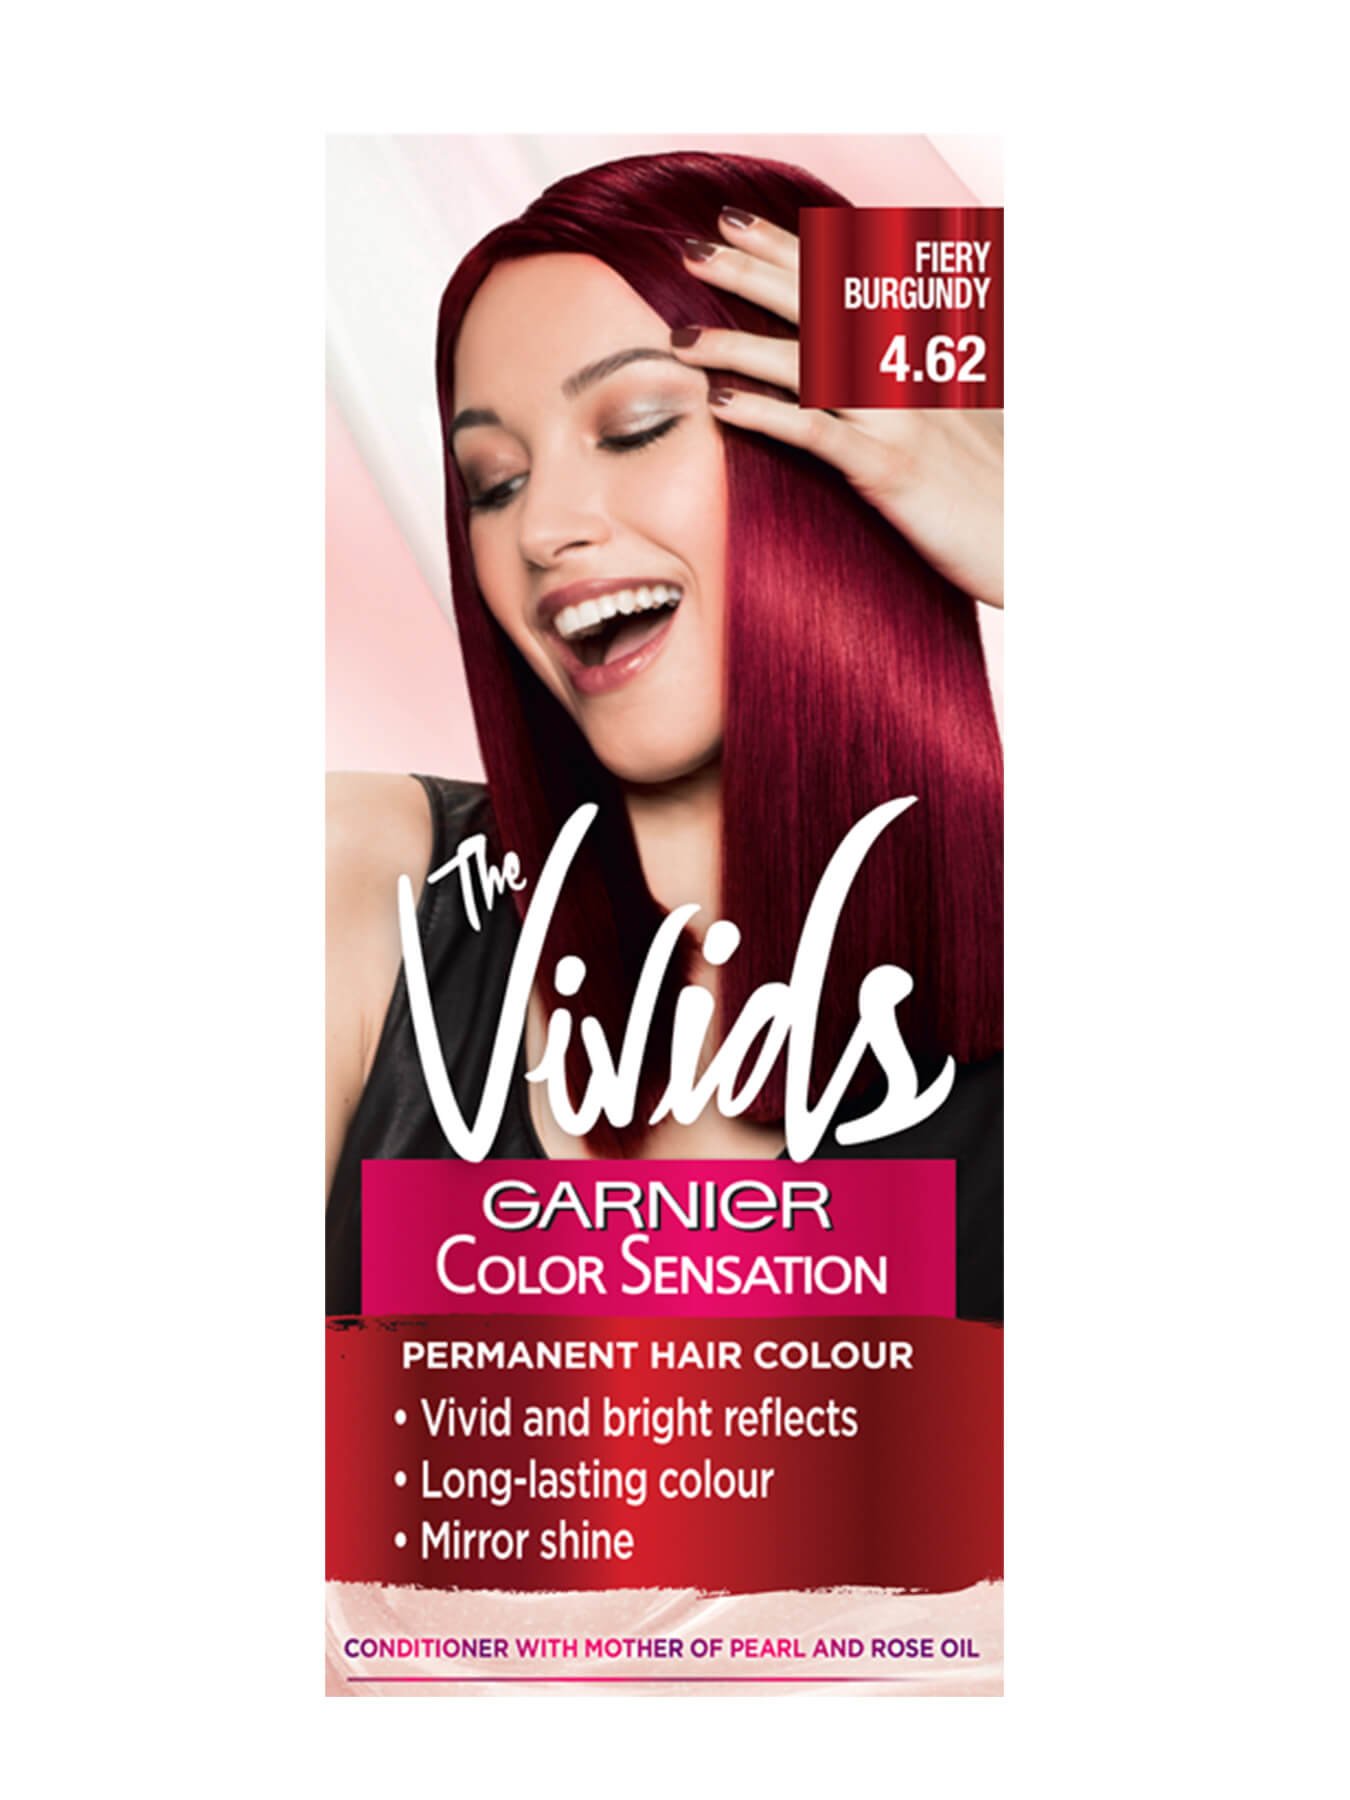 Fiery Burgundy Red Hair Dye Color Sensation Garnier